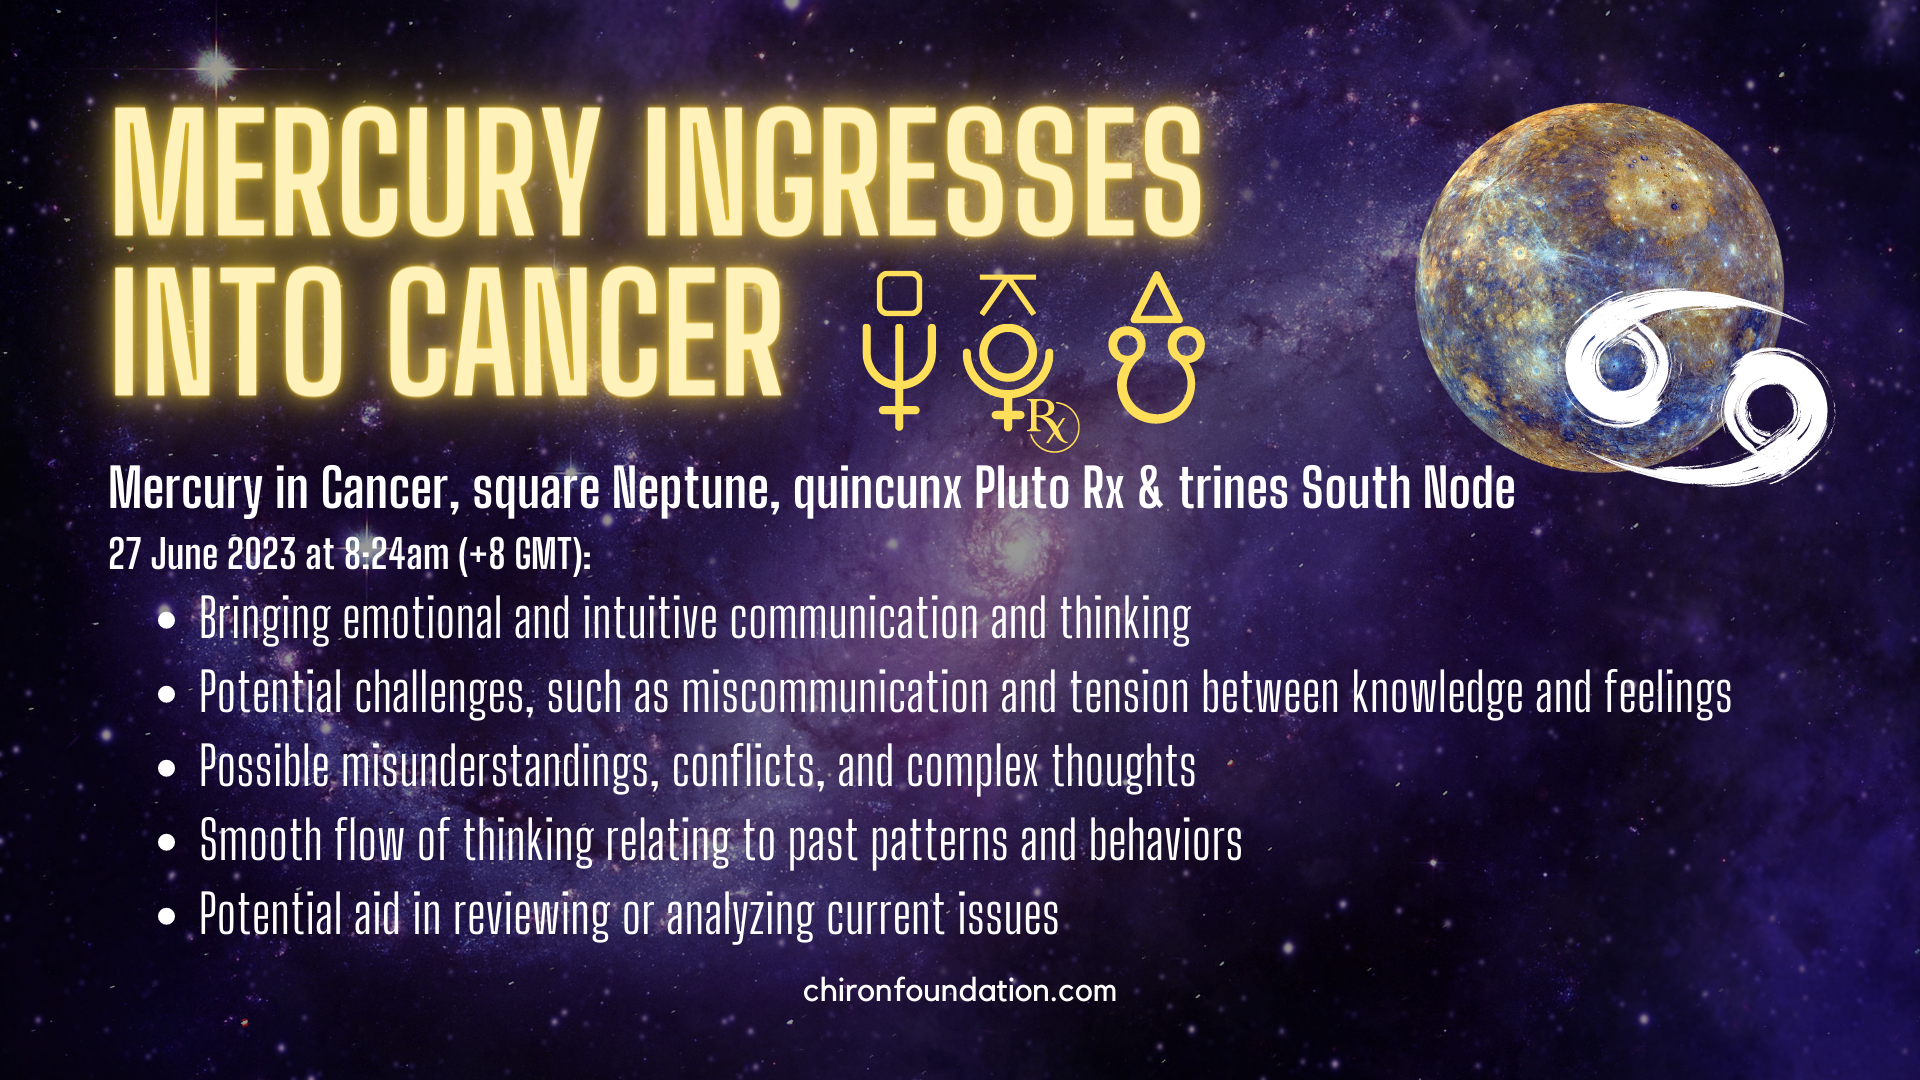 Mercury ingresses into Cancer